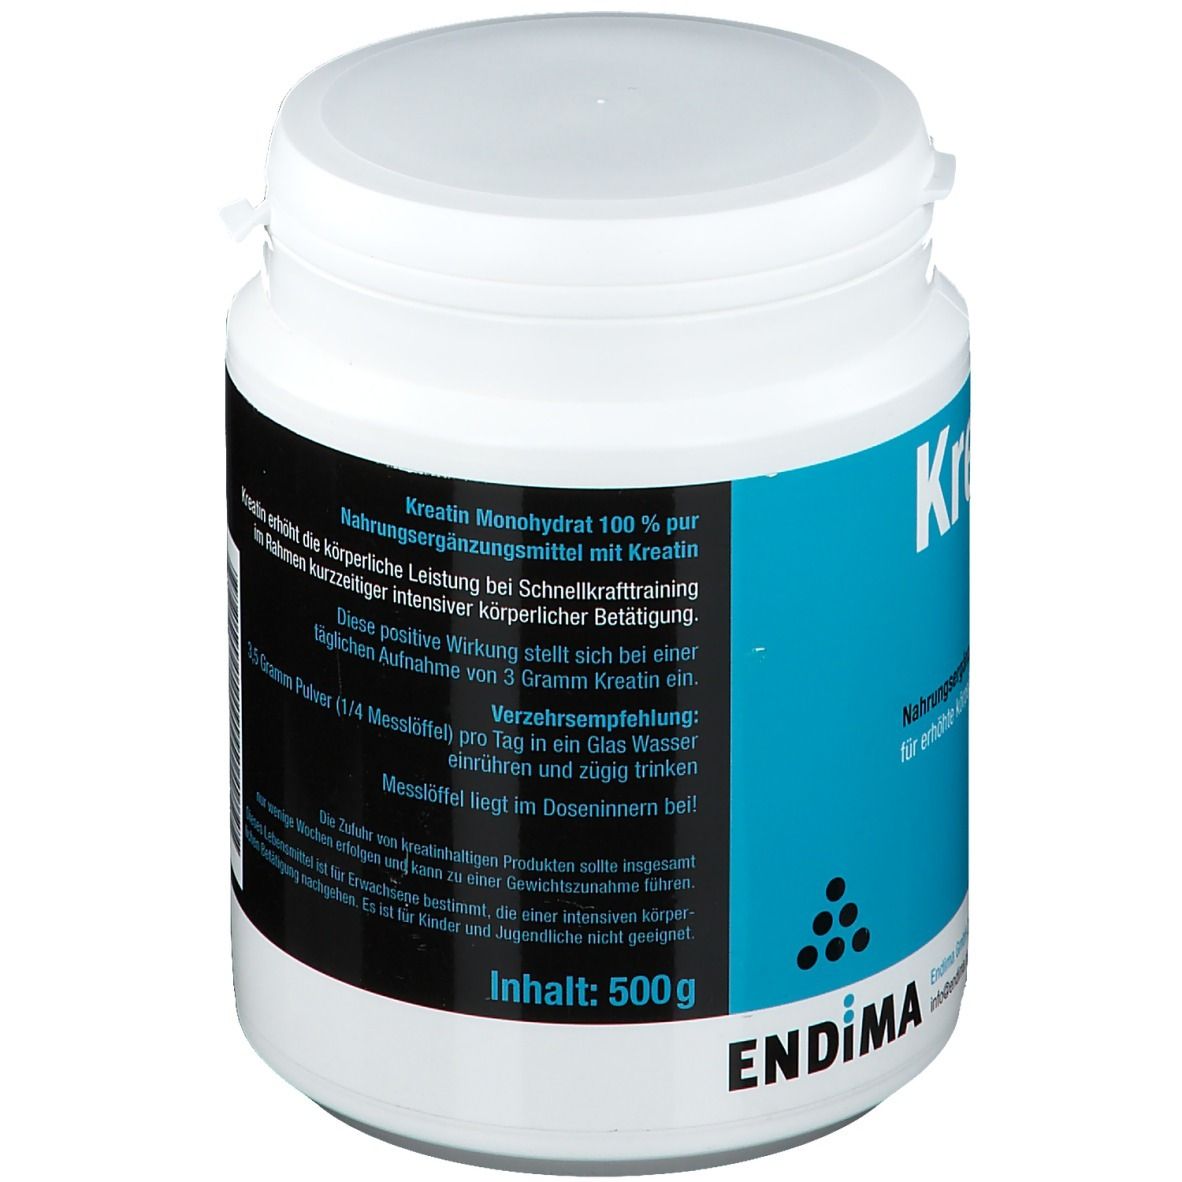 Endima® Creapure® Kreatin Monohydrat 100%